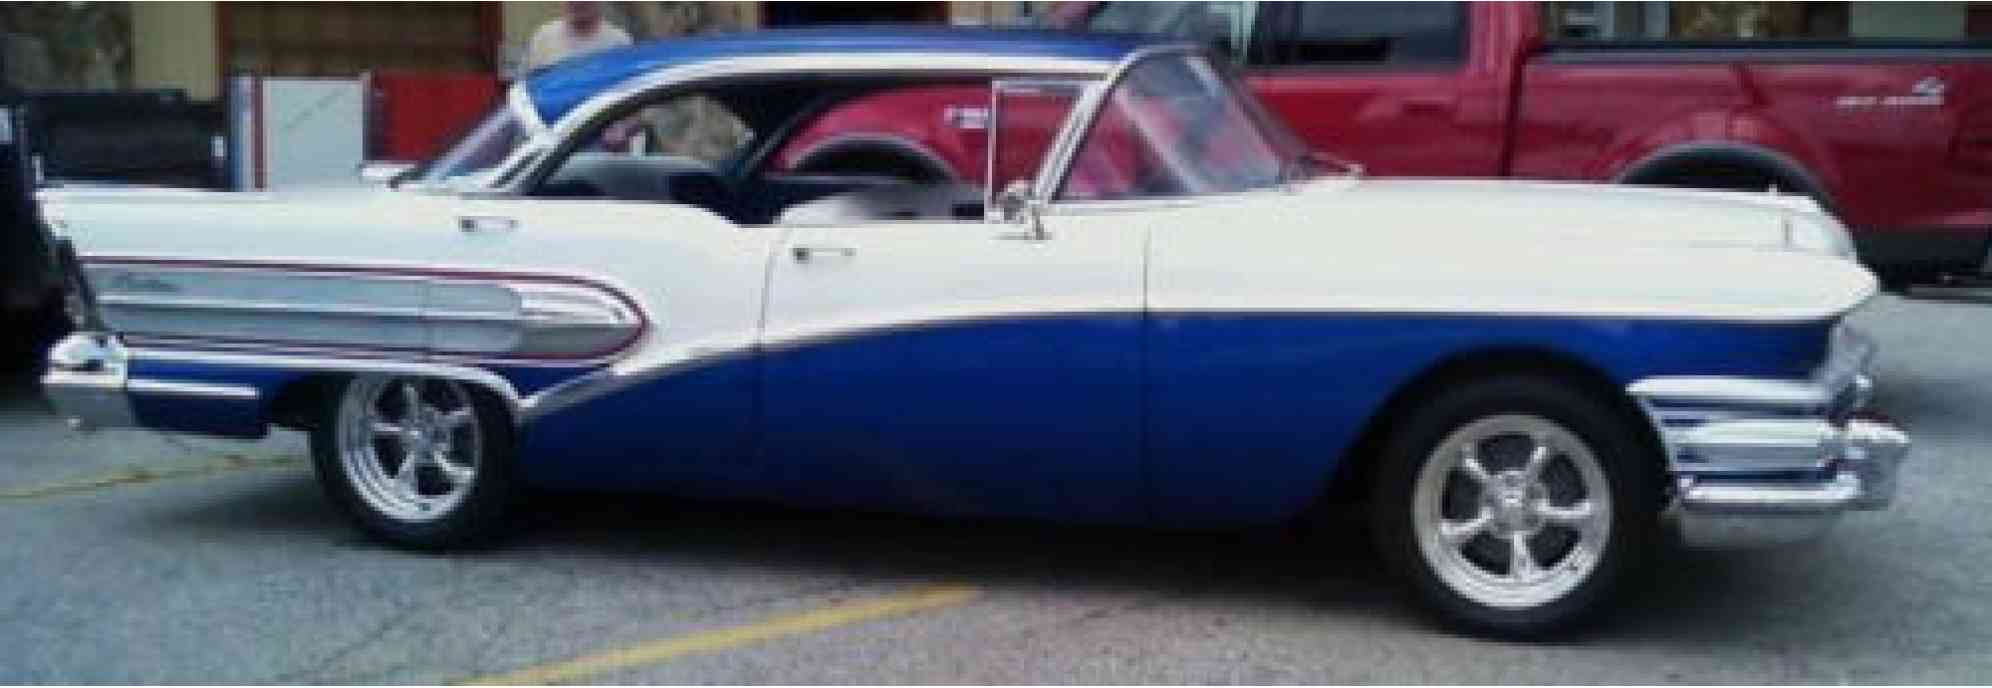 Buick Century (1958)